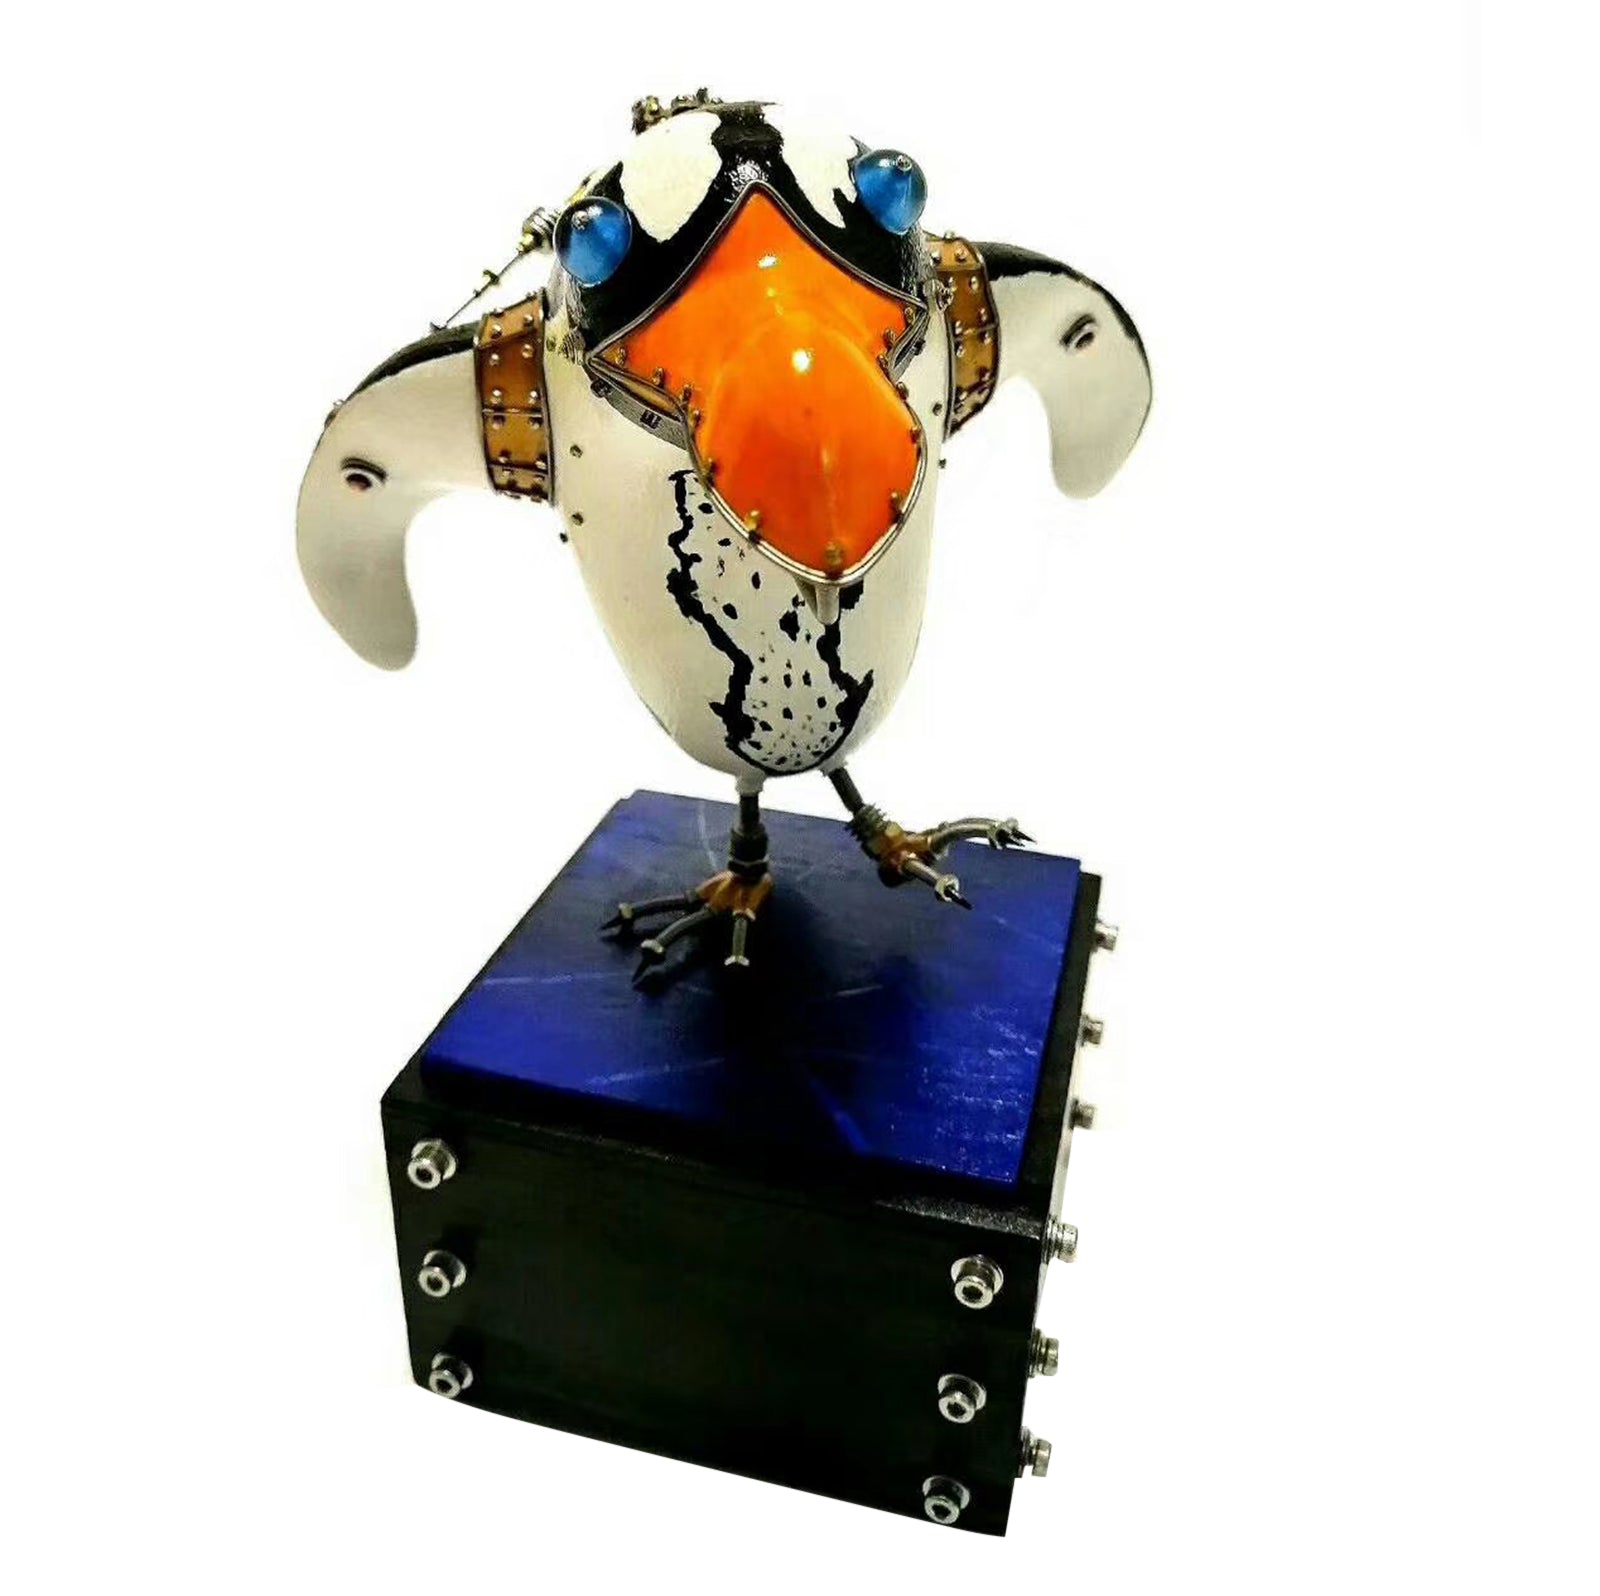 Steampunk Diving Penguin Animals Sculpture Metal Assembled Model